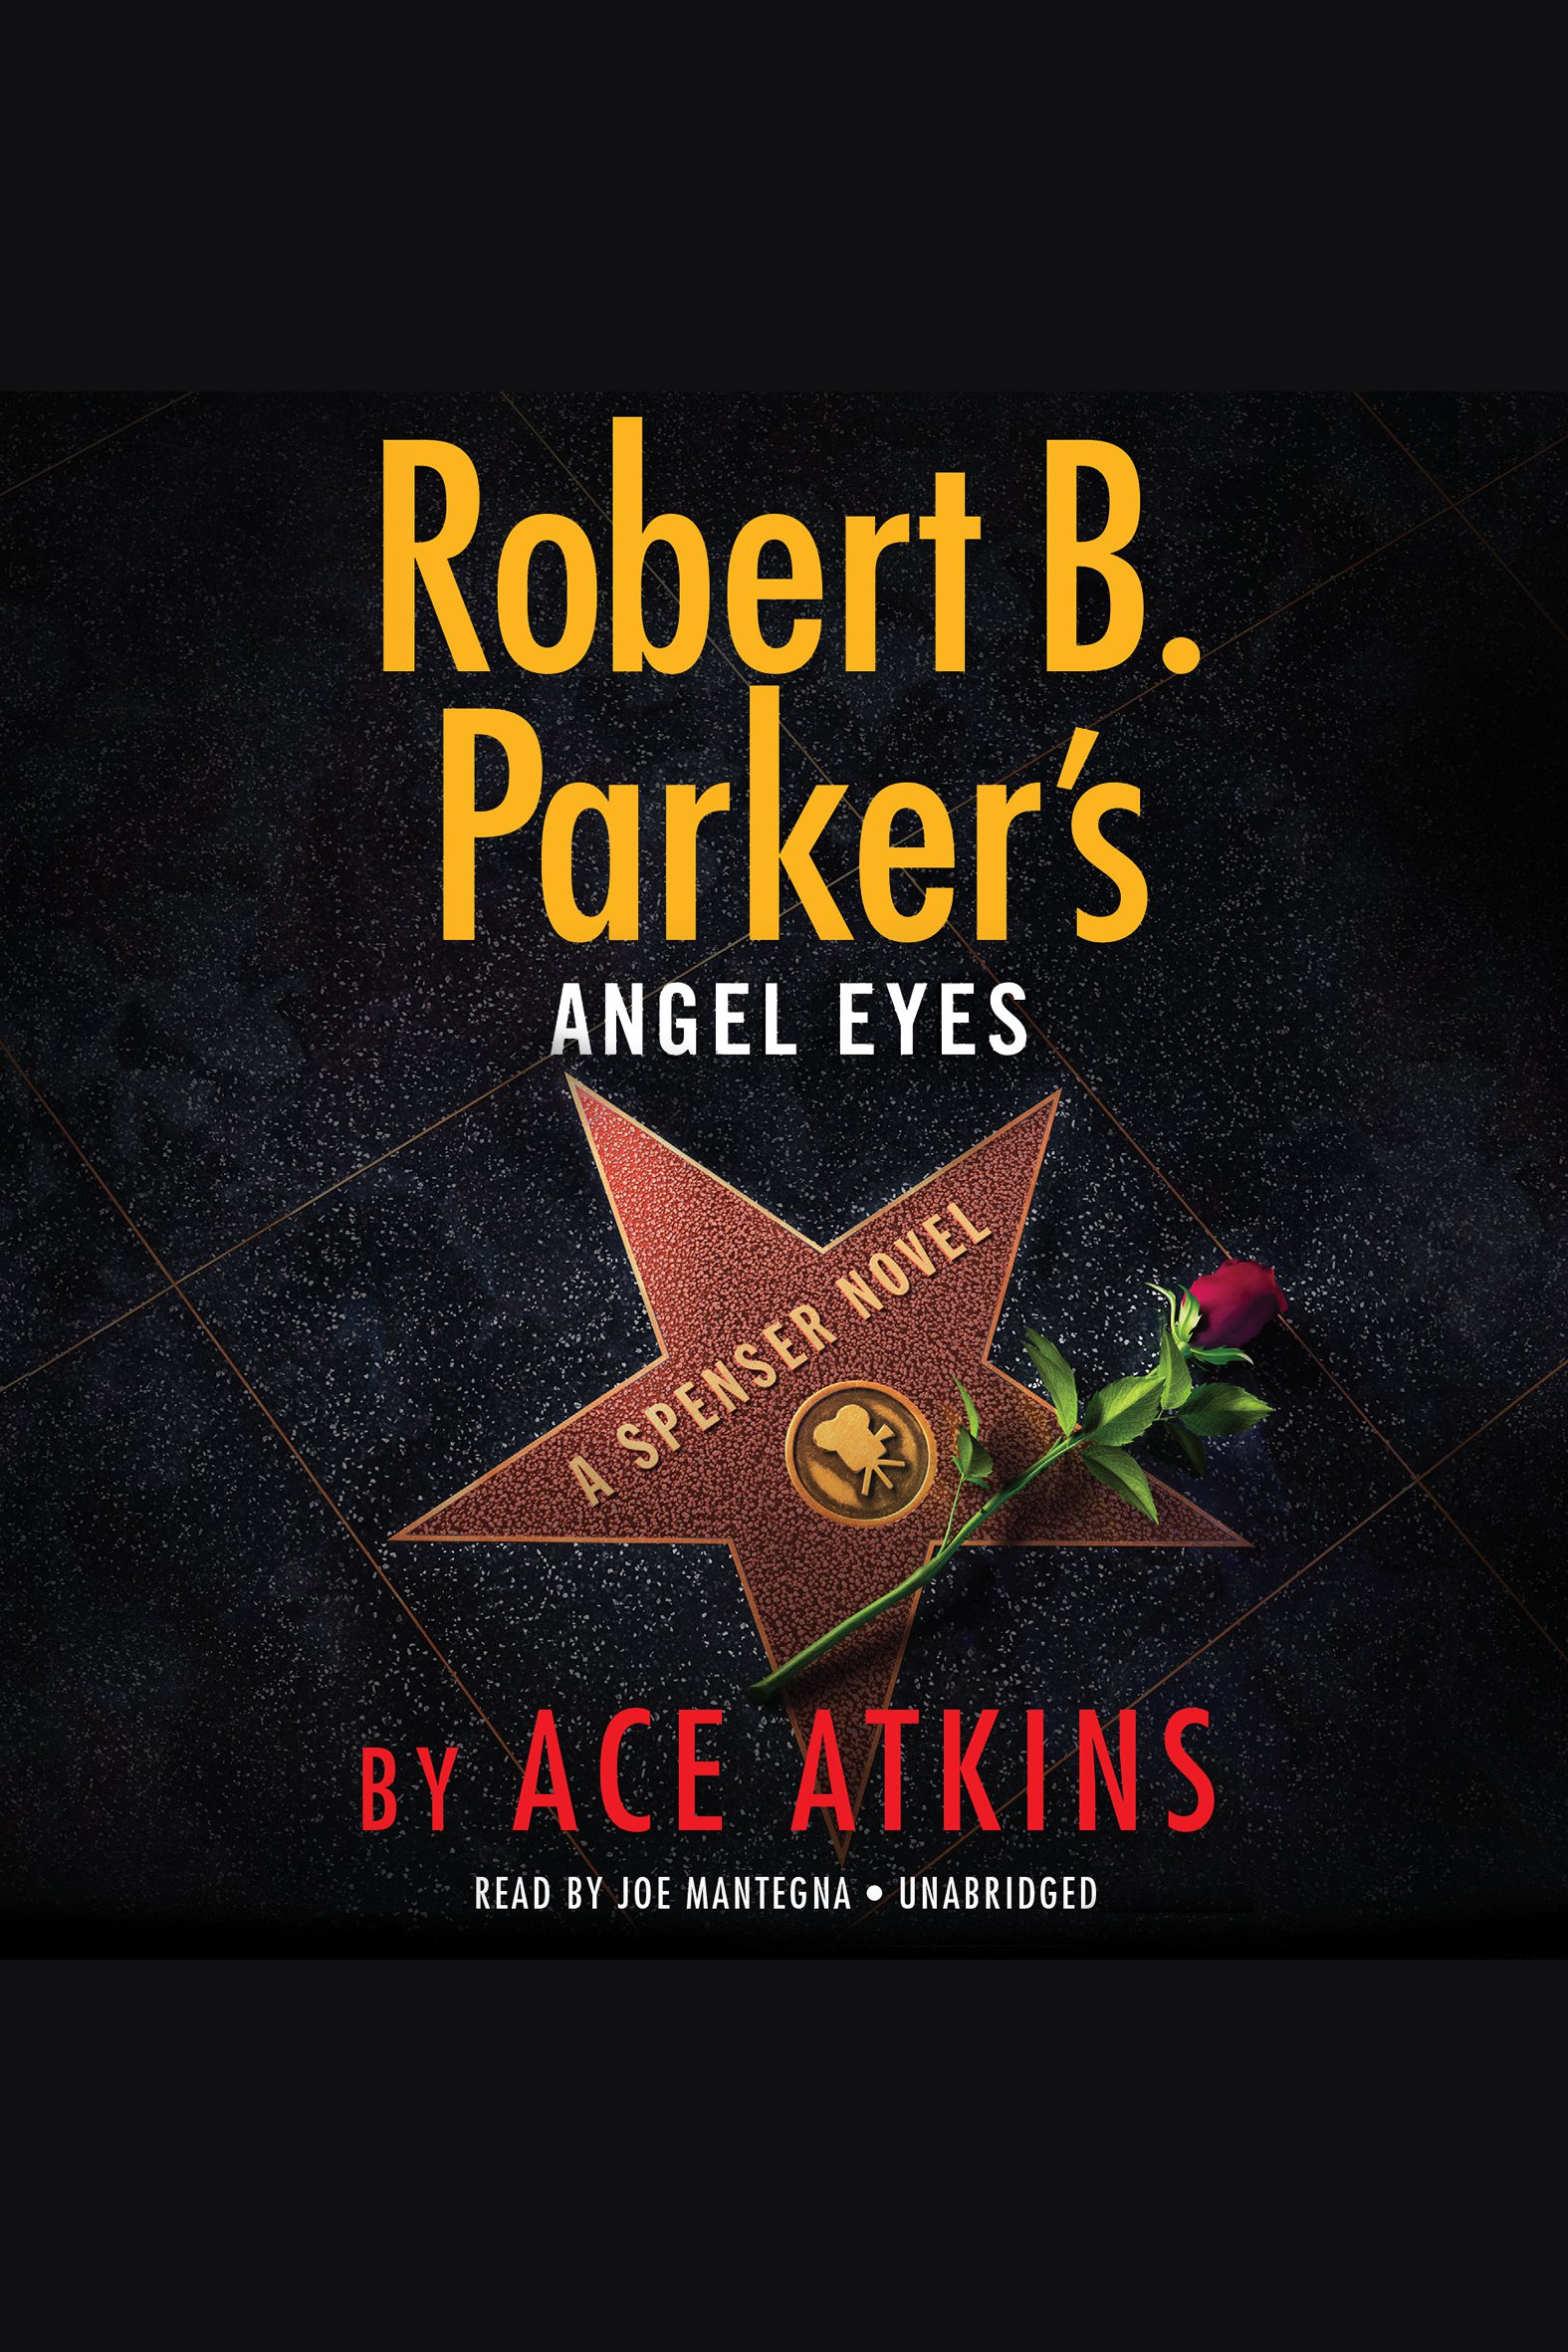 Robert B. Parker's angel eyes cover image